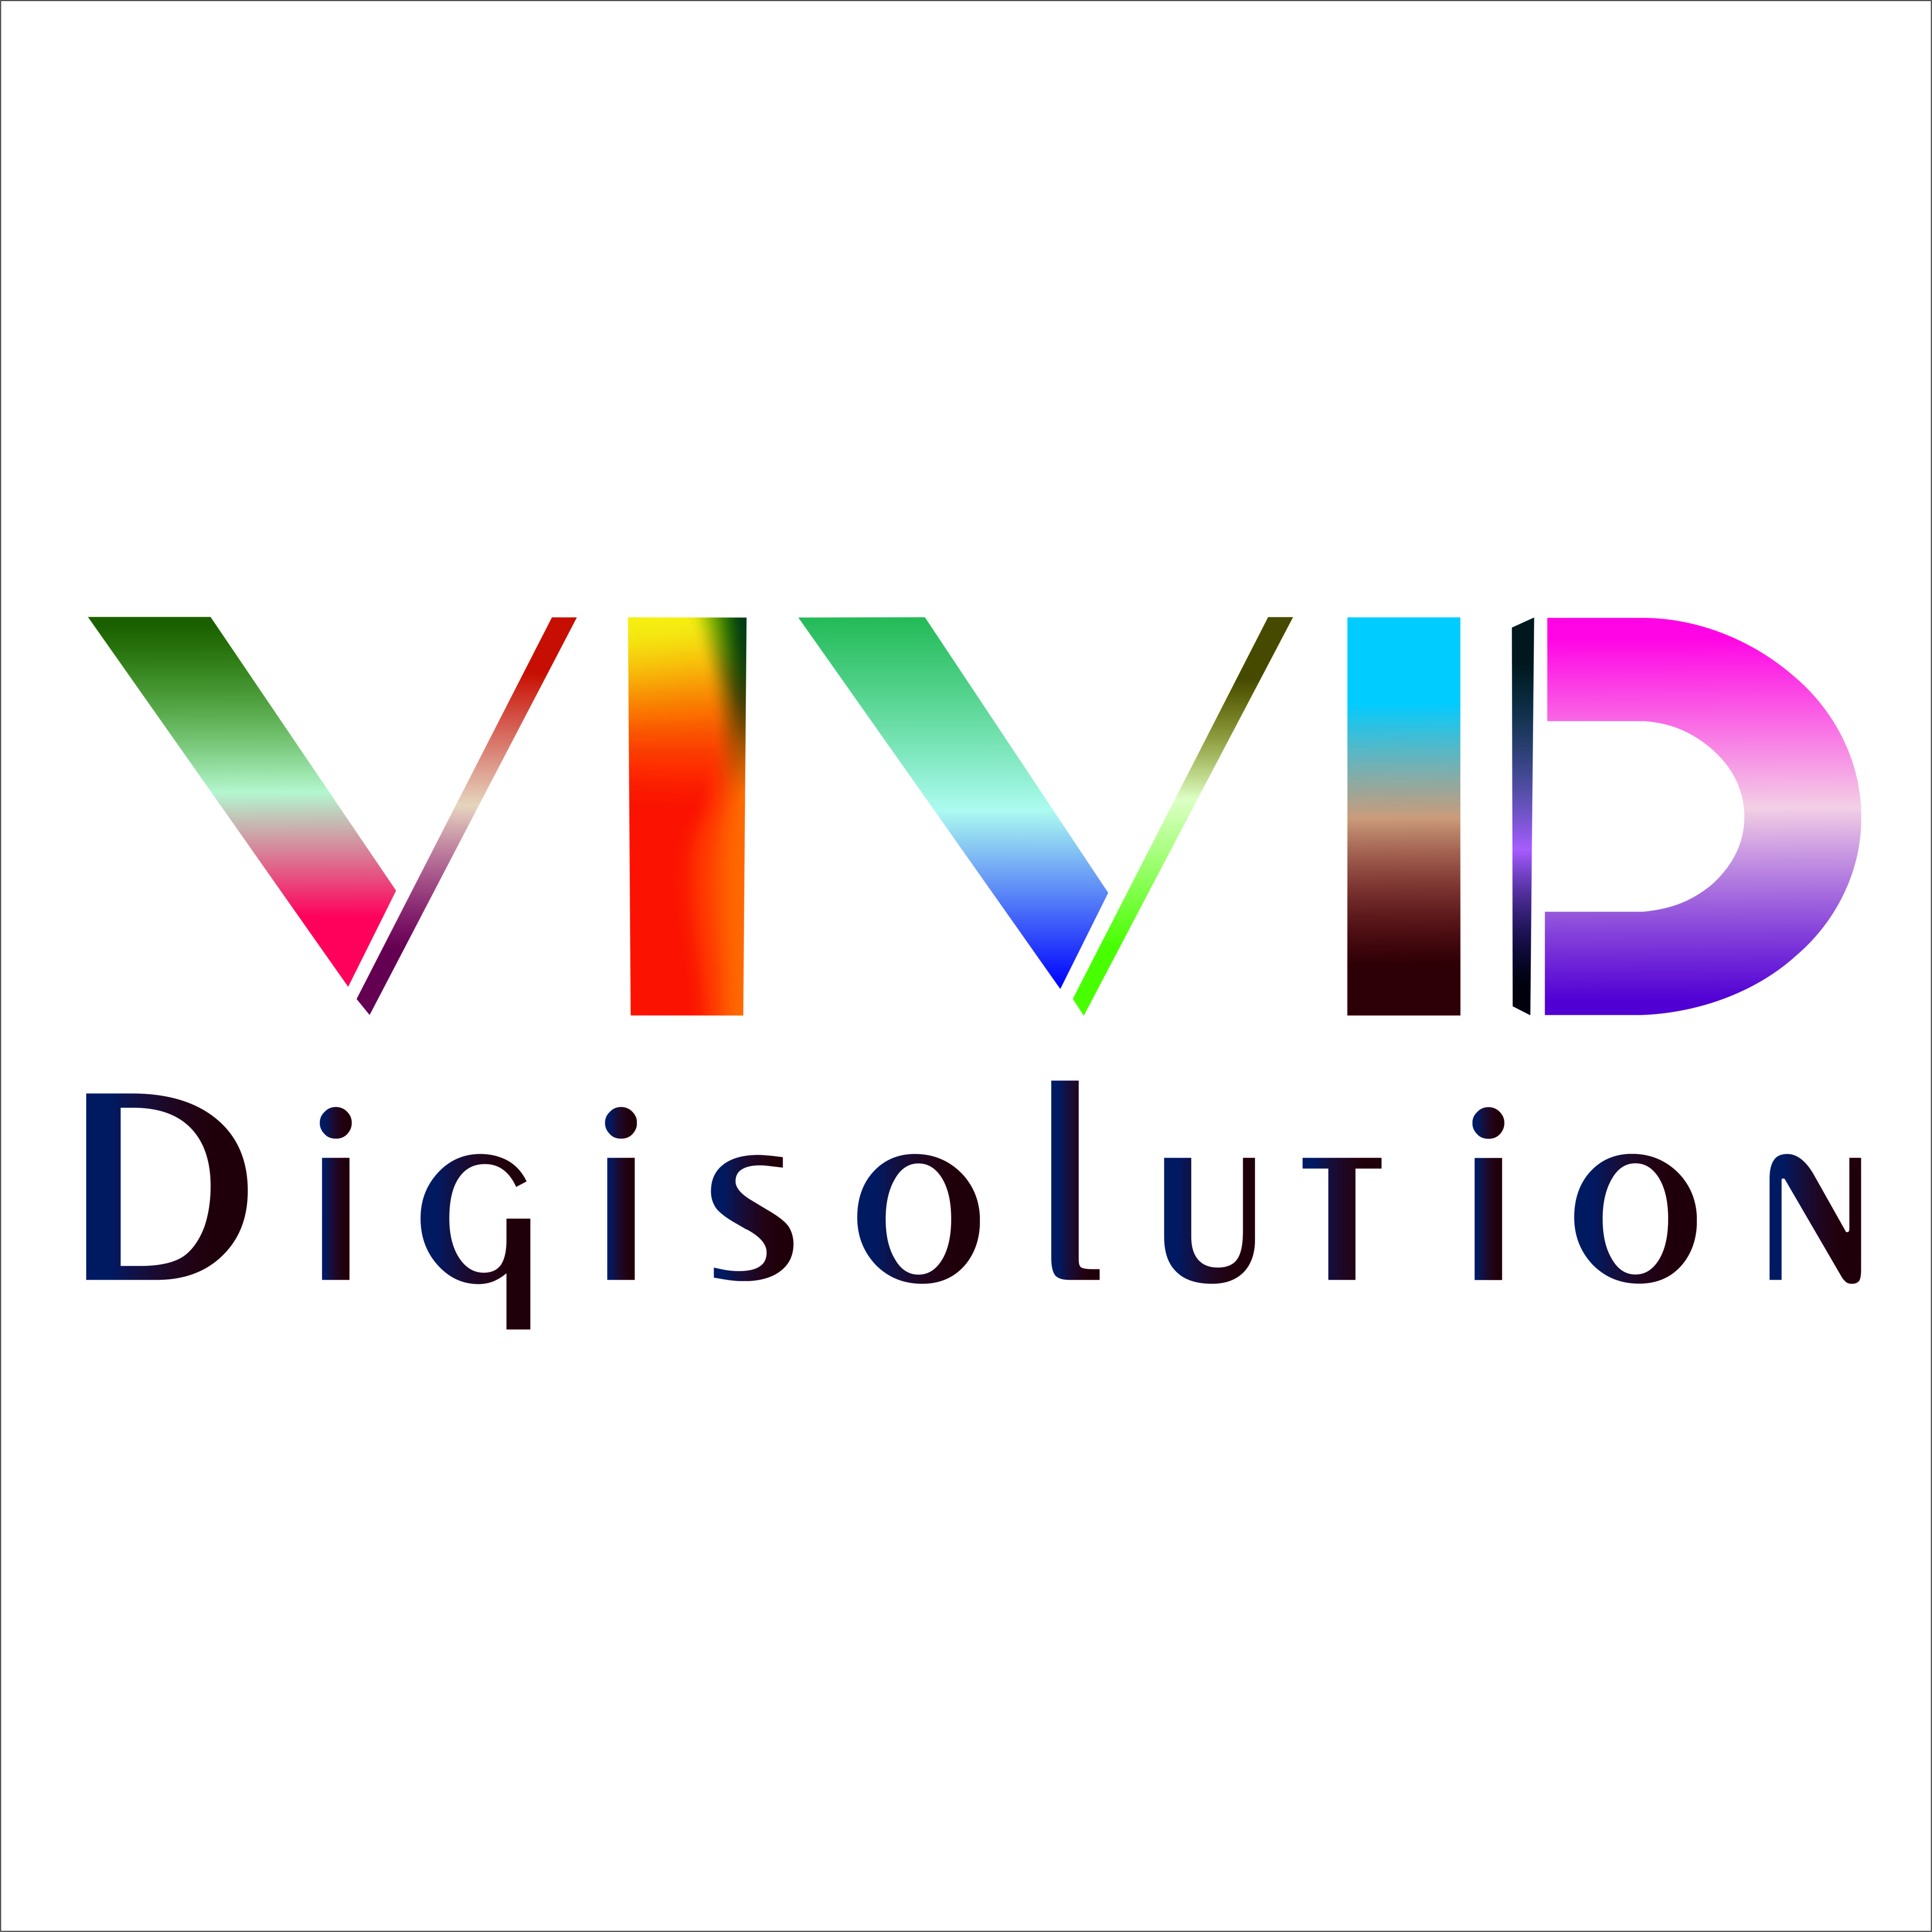 Vivid Digisolution|Architect|Professional Services